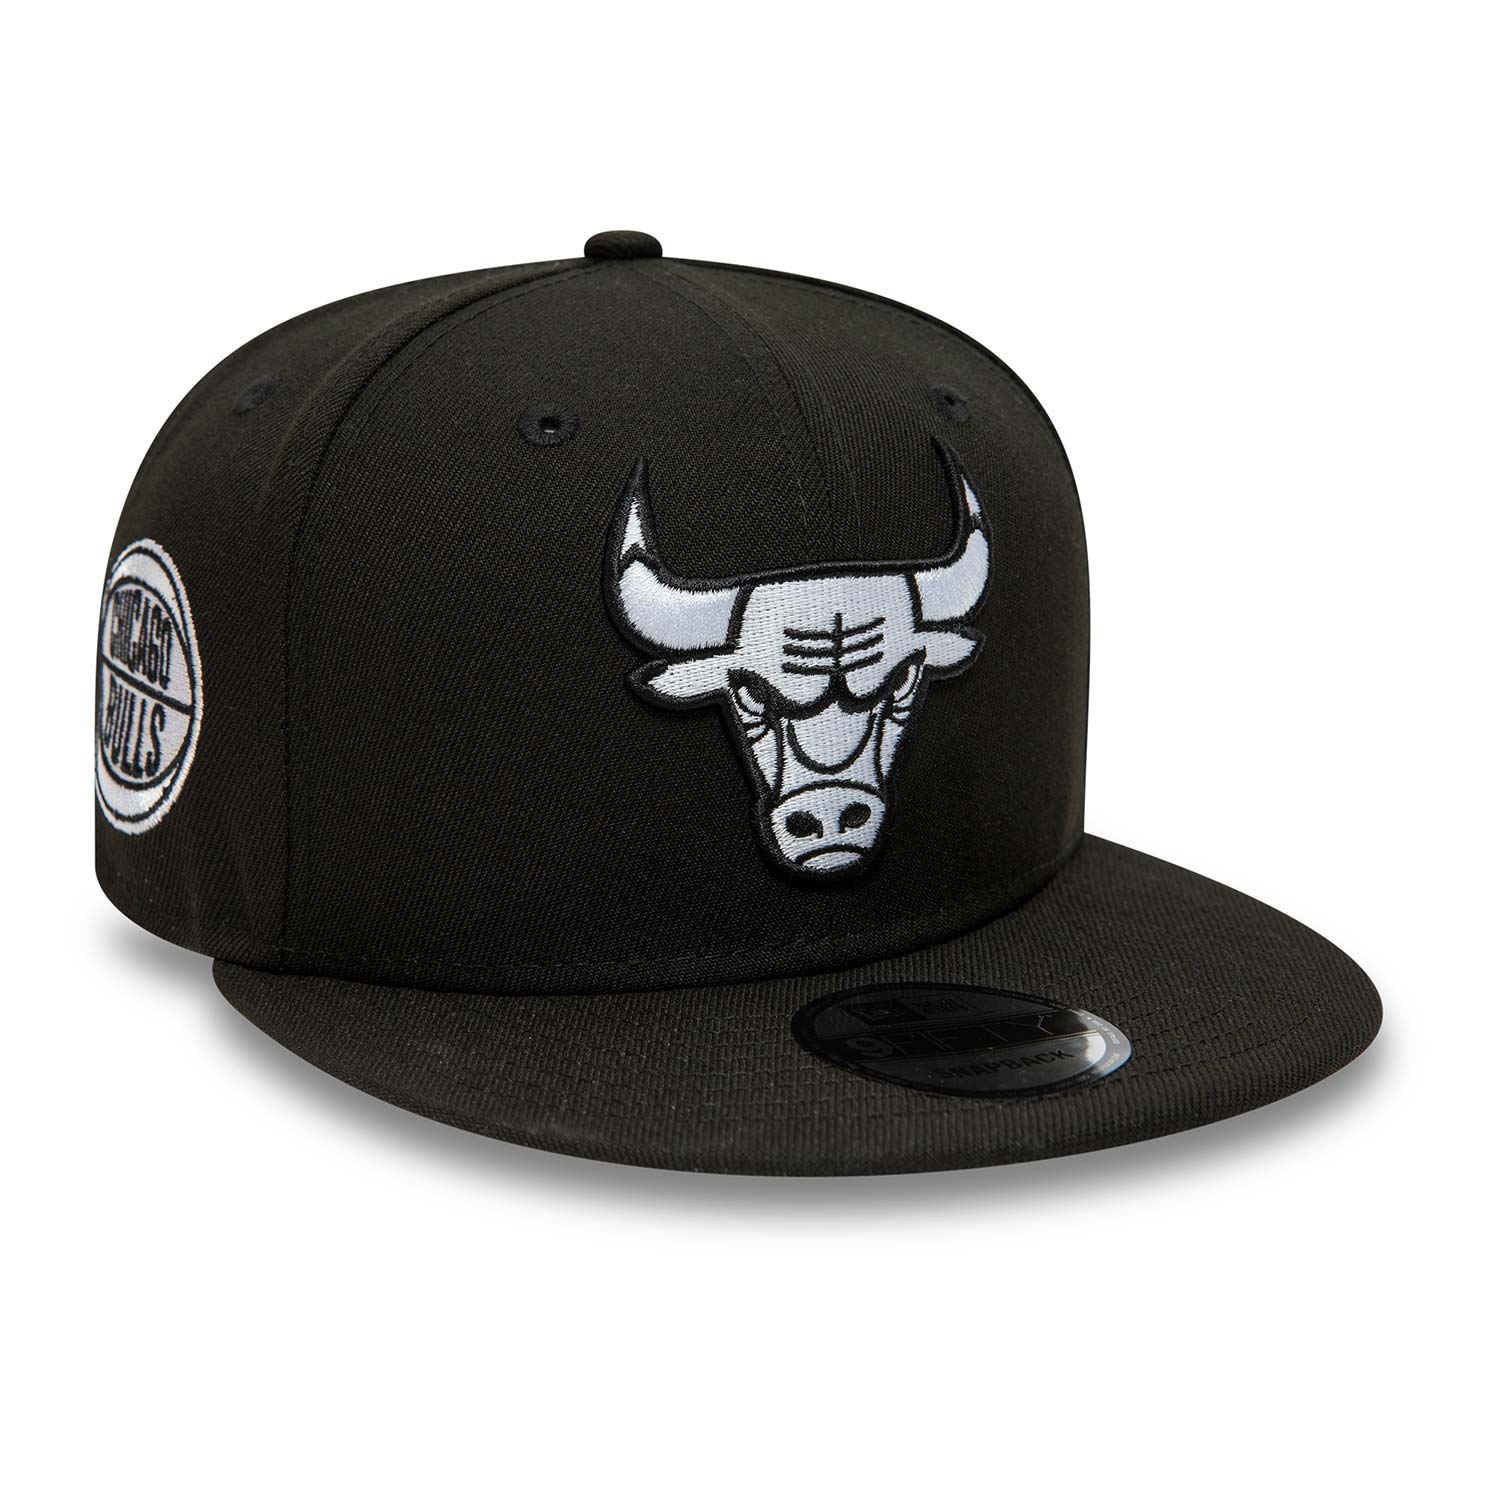 Chicago Bulls Black 9FIFTY Snapback Cap